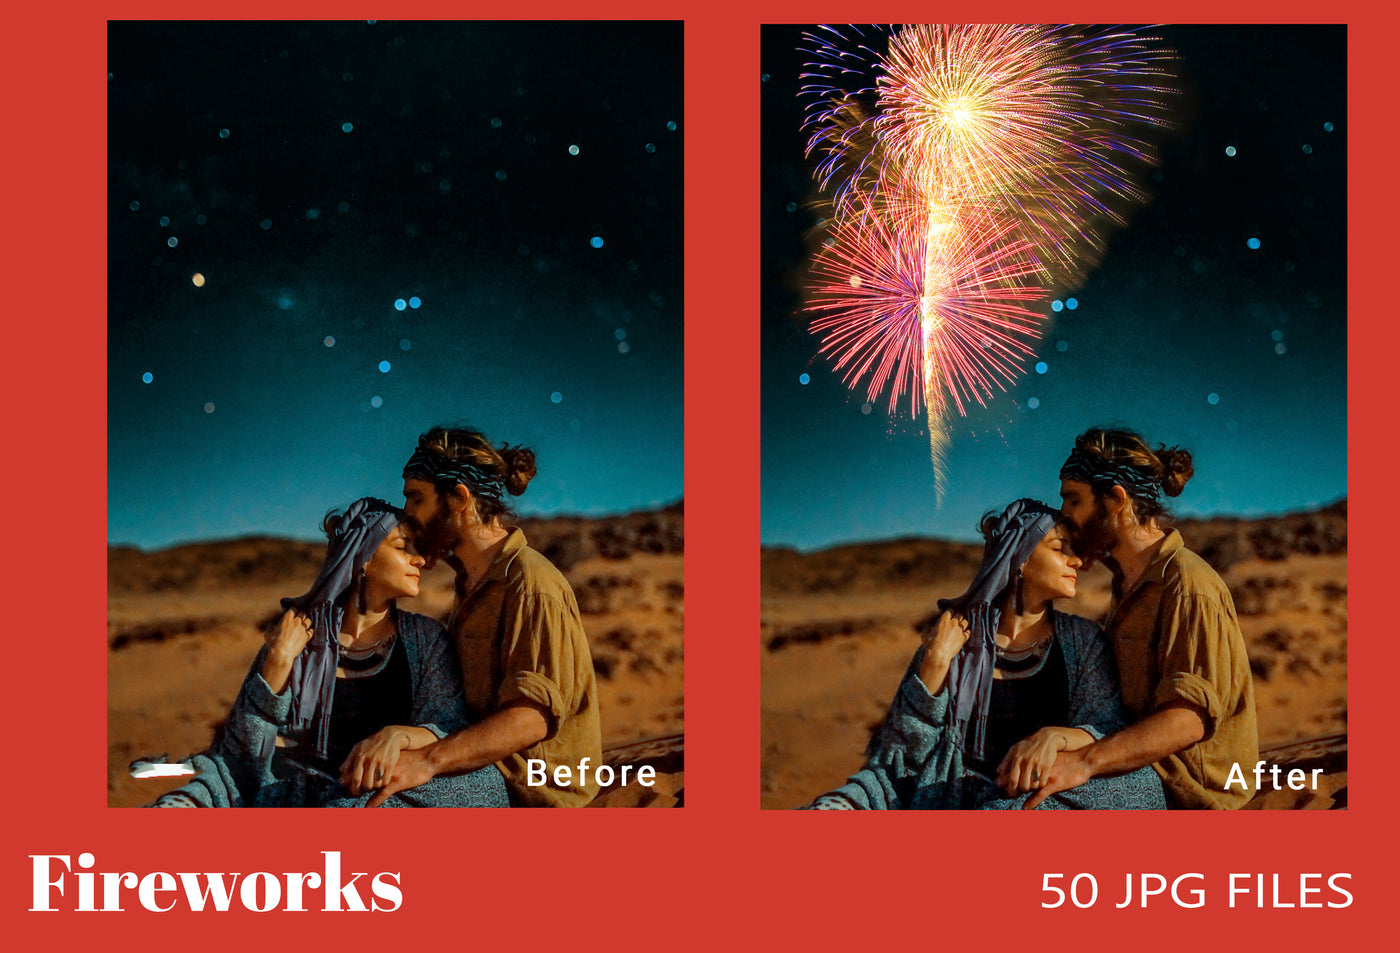 The Enchanting Photo Overlays Bundle - 1900+ Overlays-Graphics-Artixty